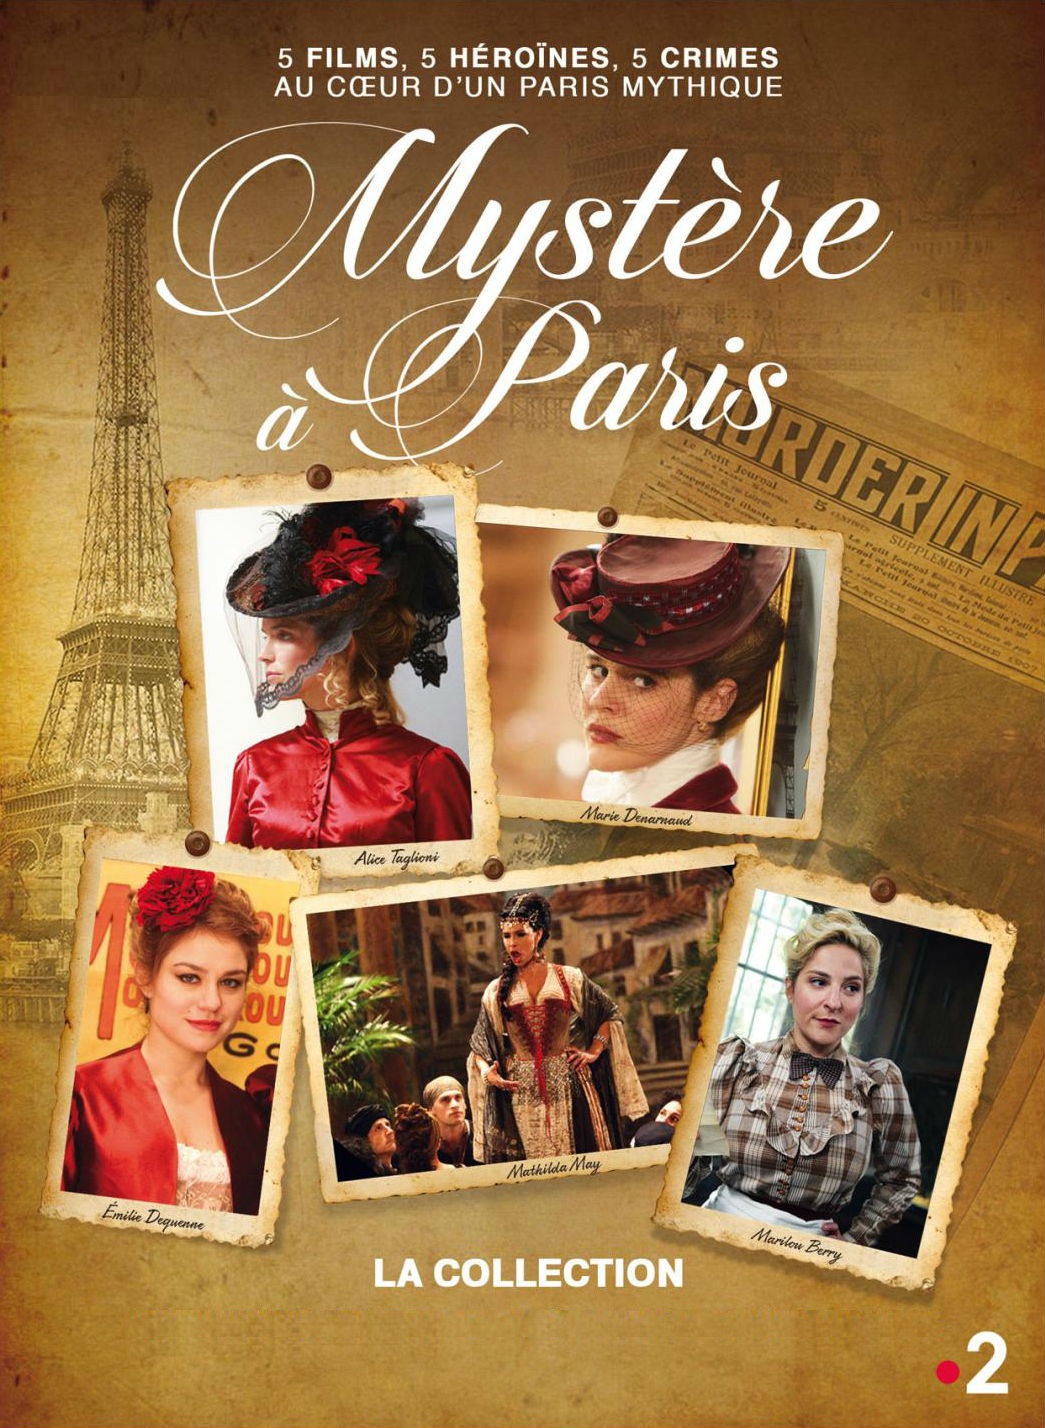 Mystery in Paris